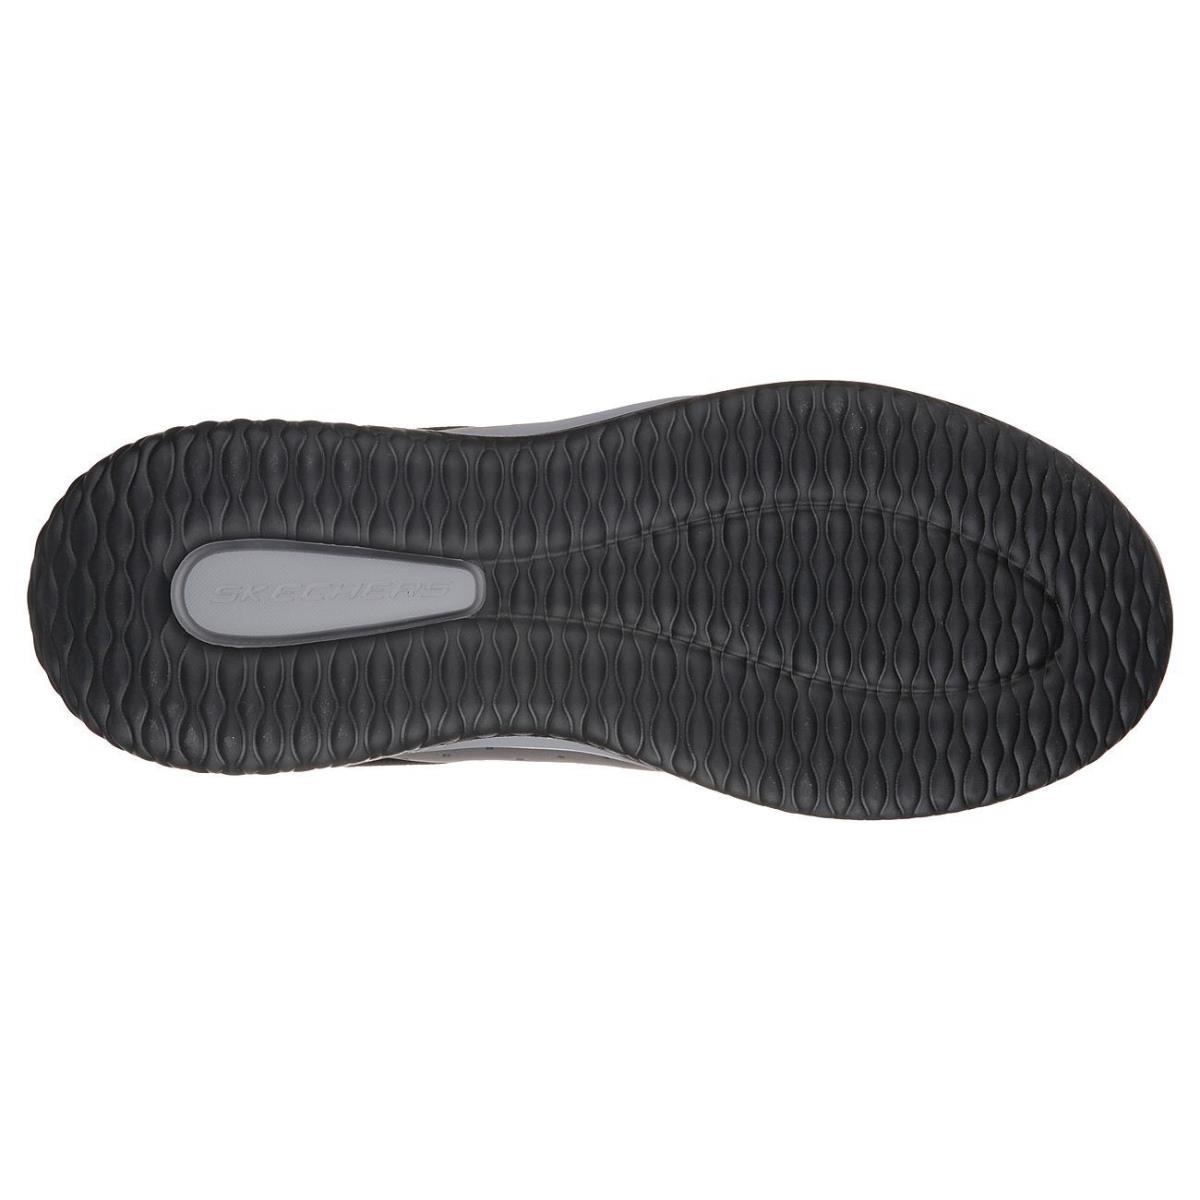 Skechers shoes  - Black/Gray 2